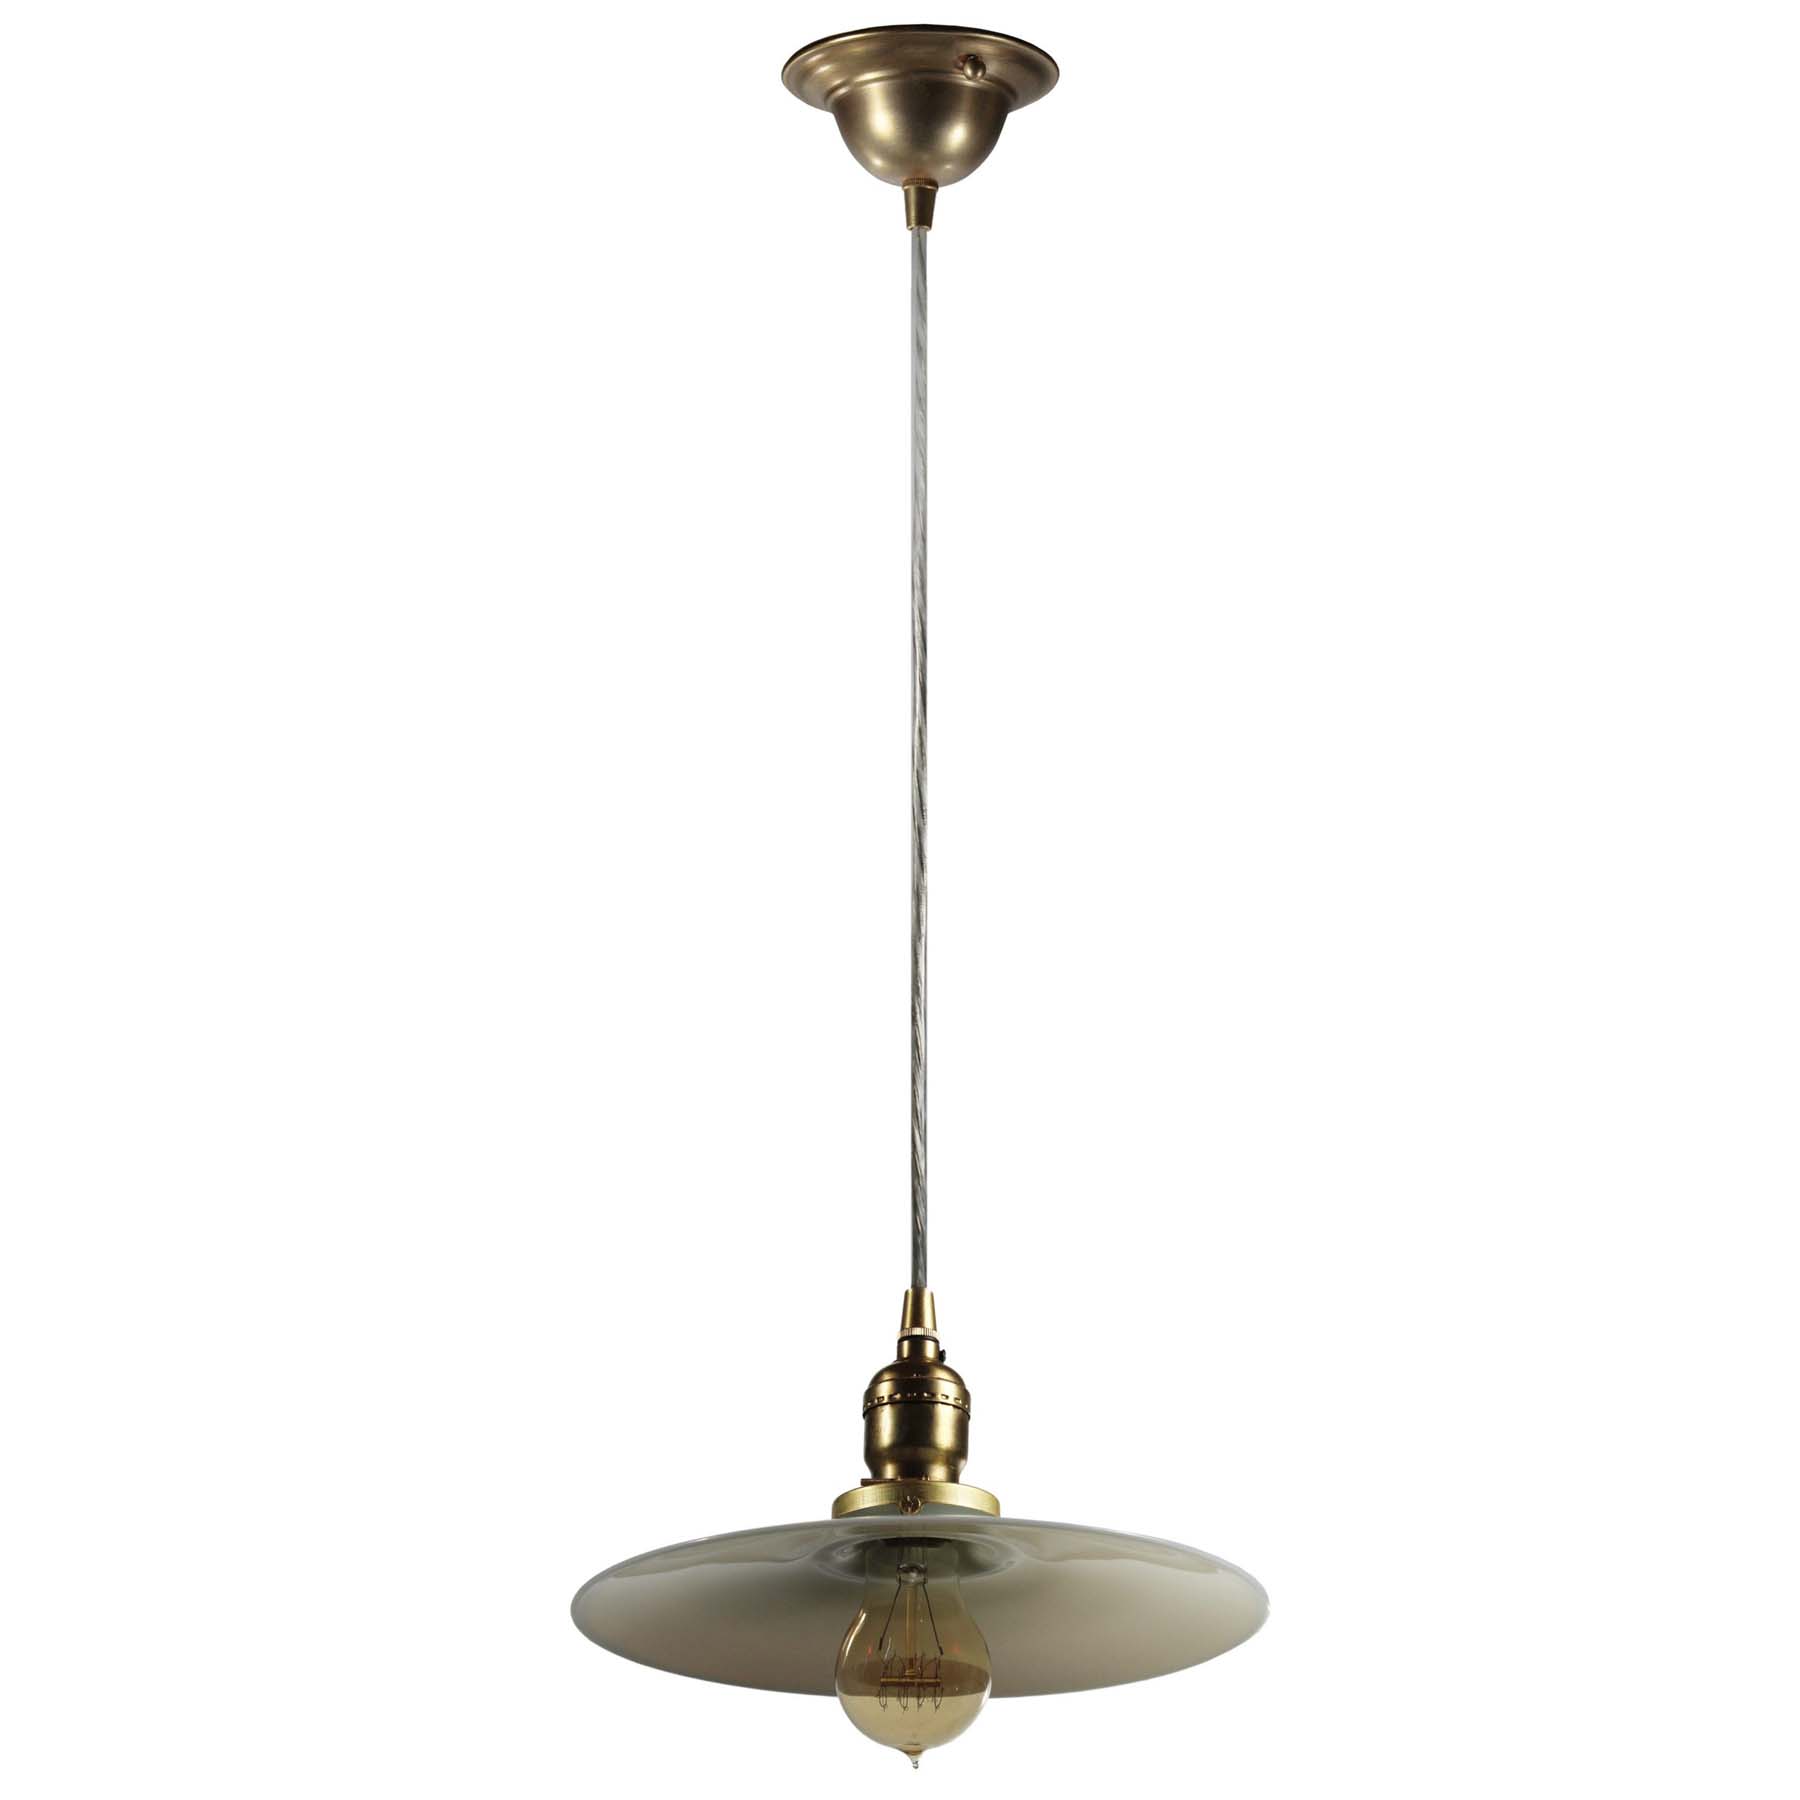 Antique Brass Pendant Light with Milk Glass Shade -72431